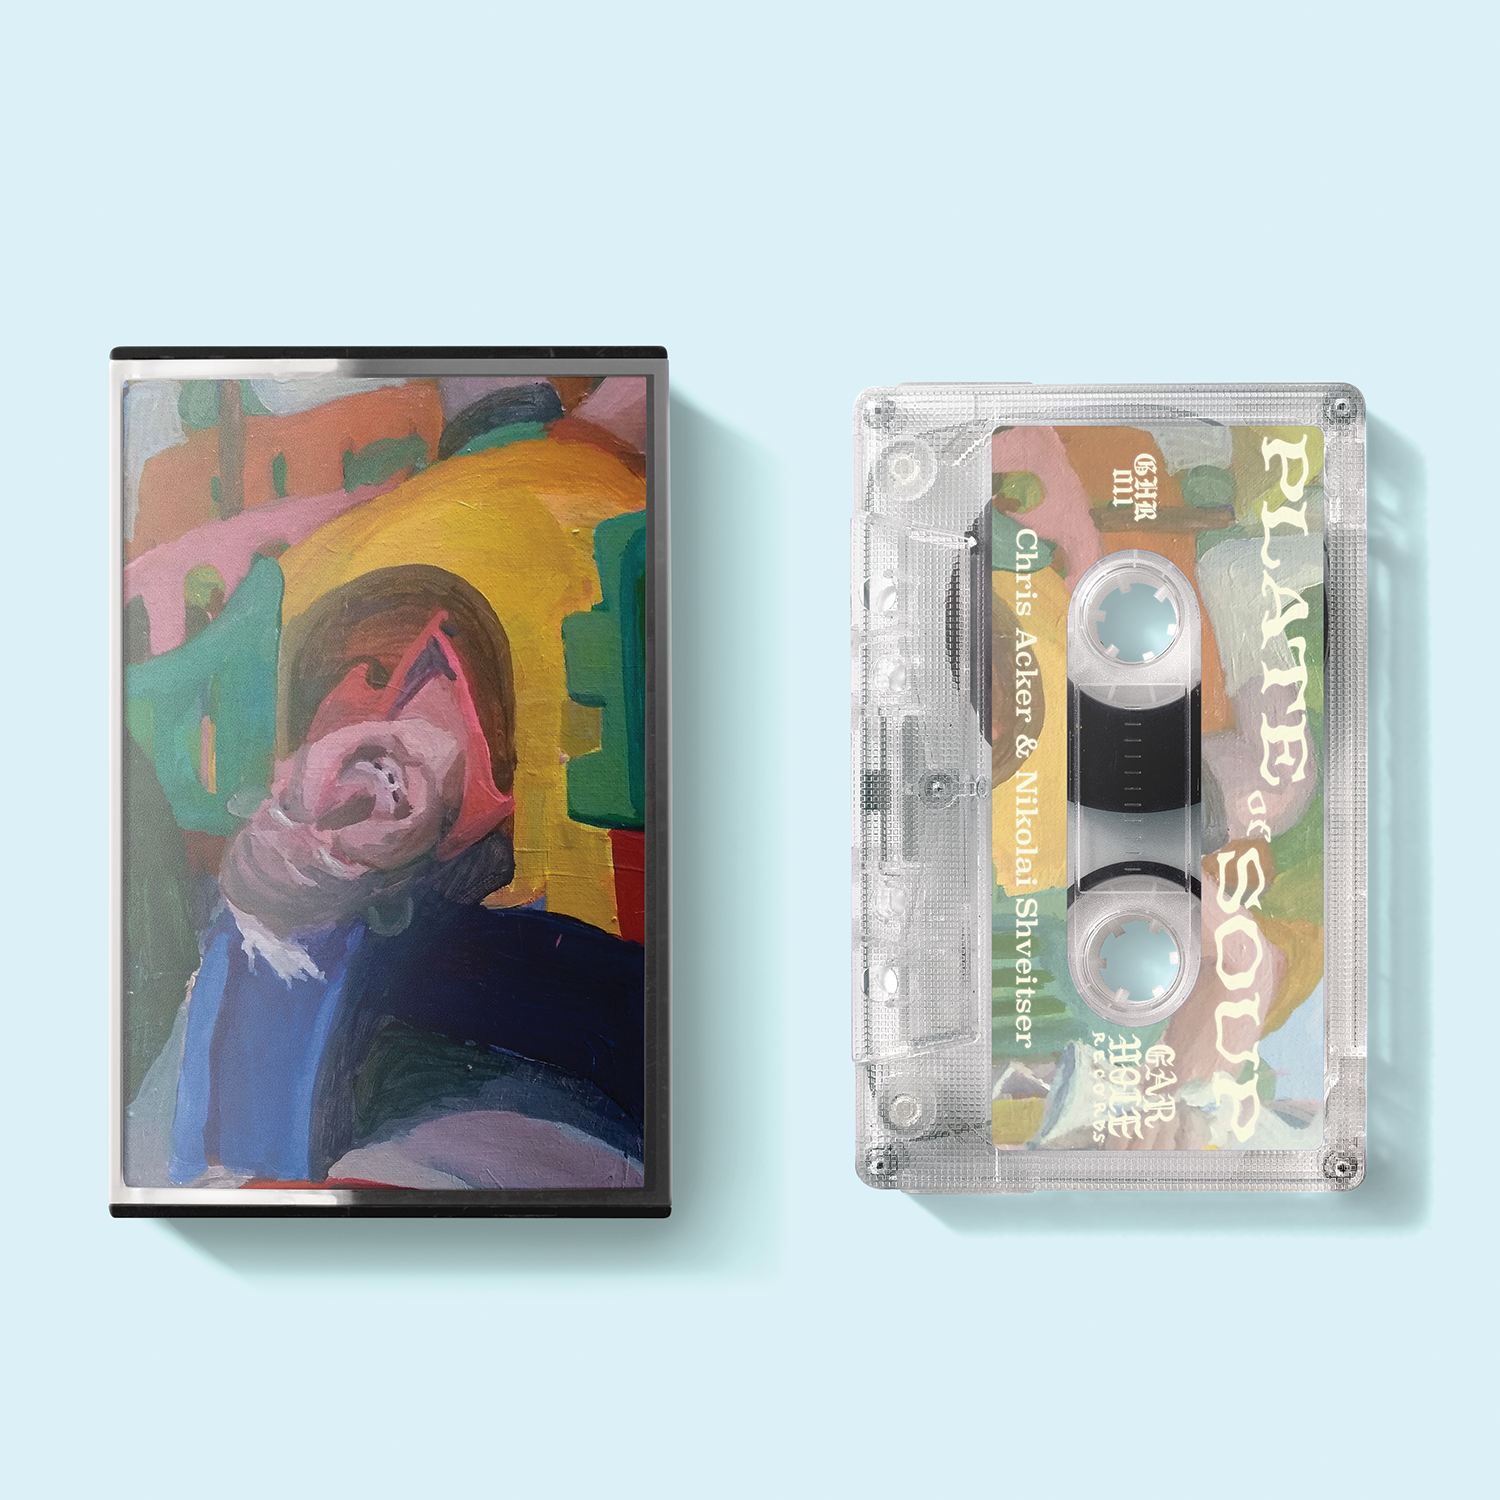 Chris Acker & Nikolai Shveitser - "Plate of Soup: Odd, Ordinary & Otherwise Demos" Cassette